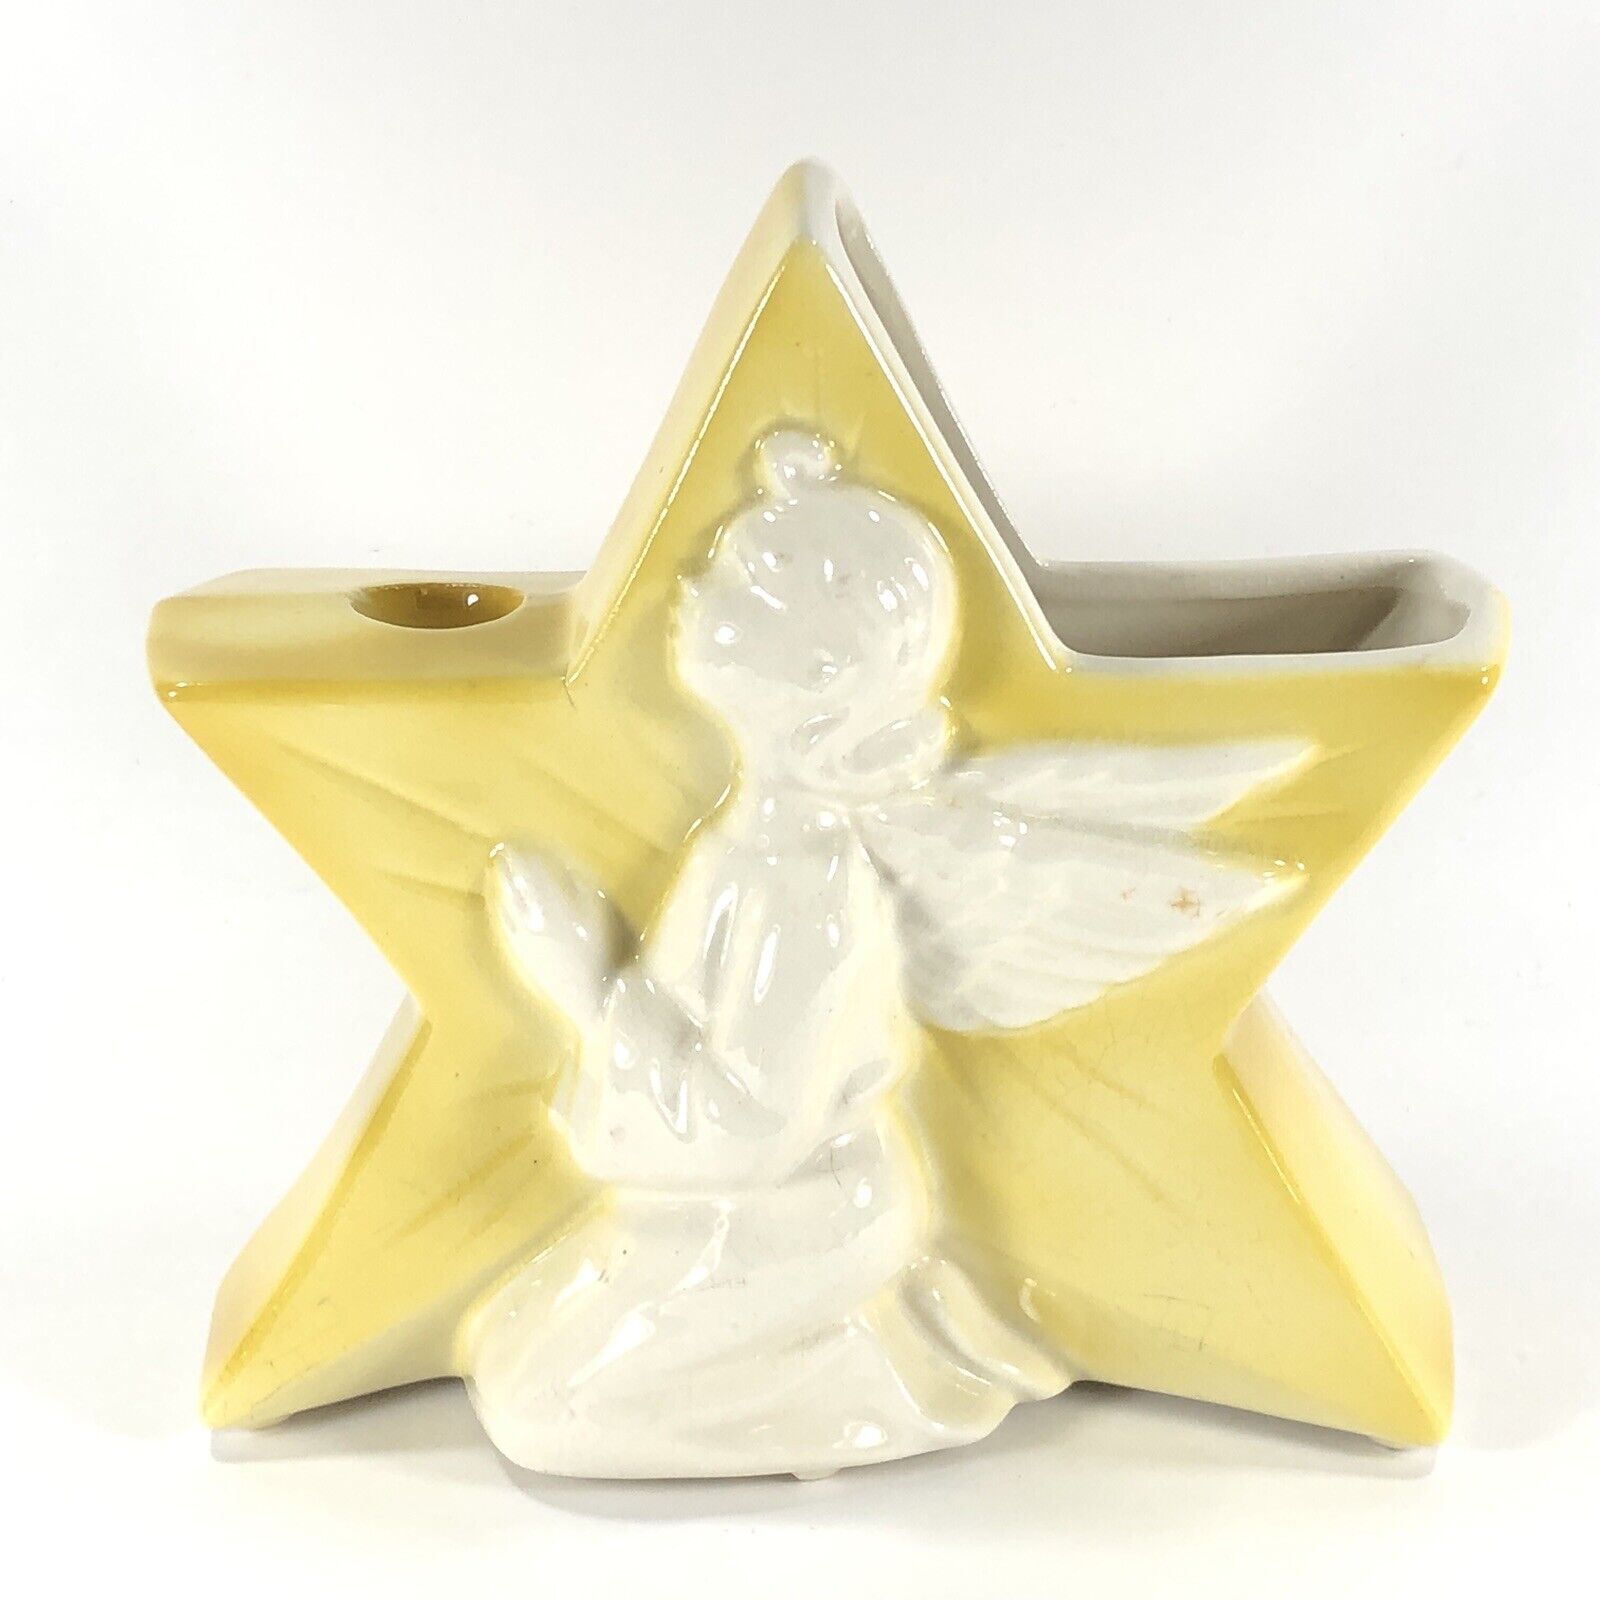 VTG Royal Copley Spaulding Angel on Star combo Vase and Candleholder Yellow